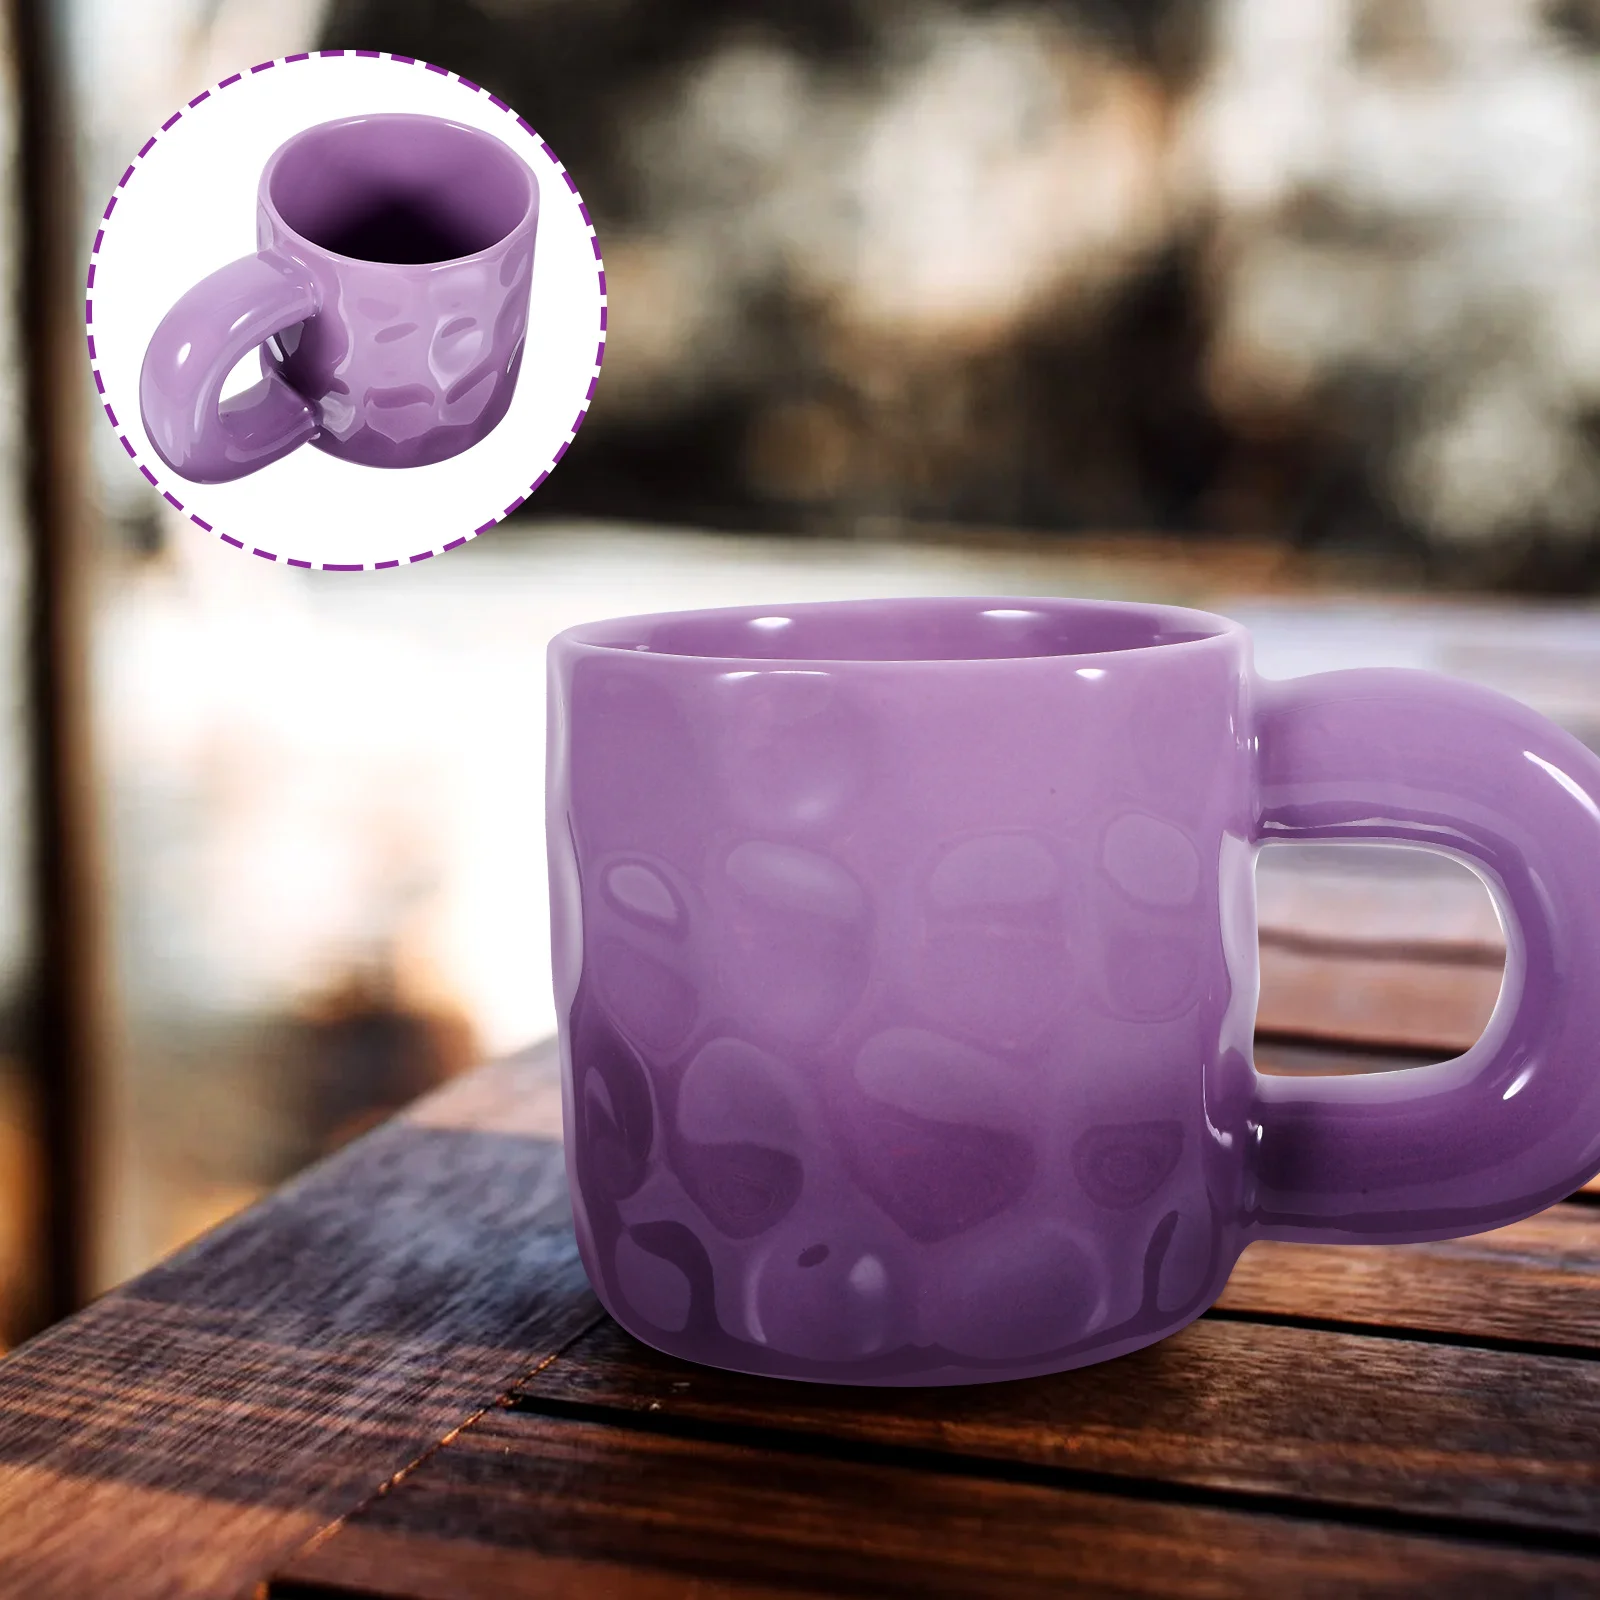 

Mug Ceramic Tea Cup Water Glasses Latte Drinking Ceramics Coffee Porcelain Office